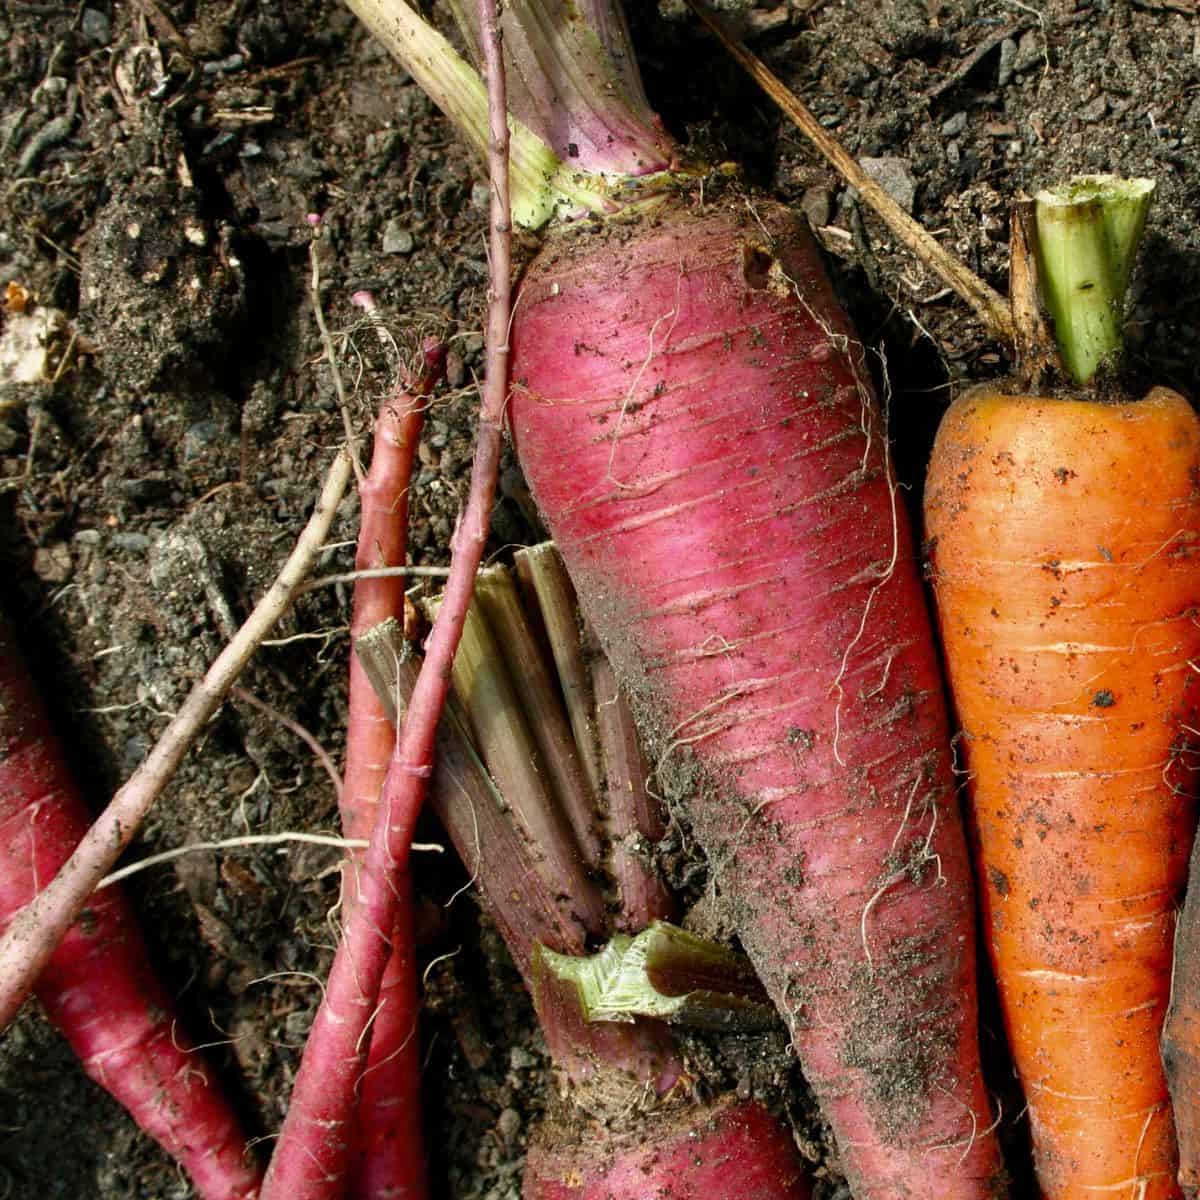 multicolored carrots in raised bed garden soil